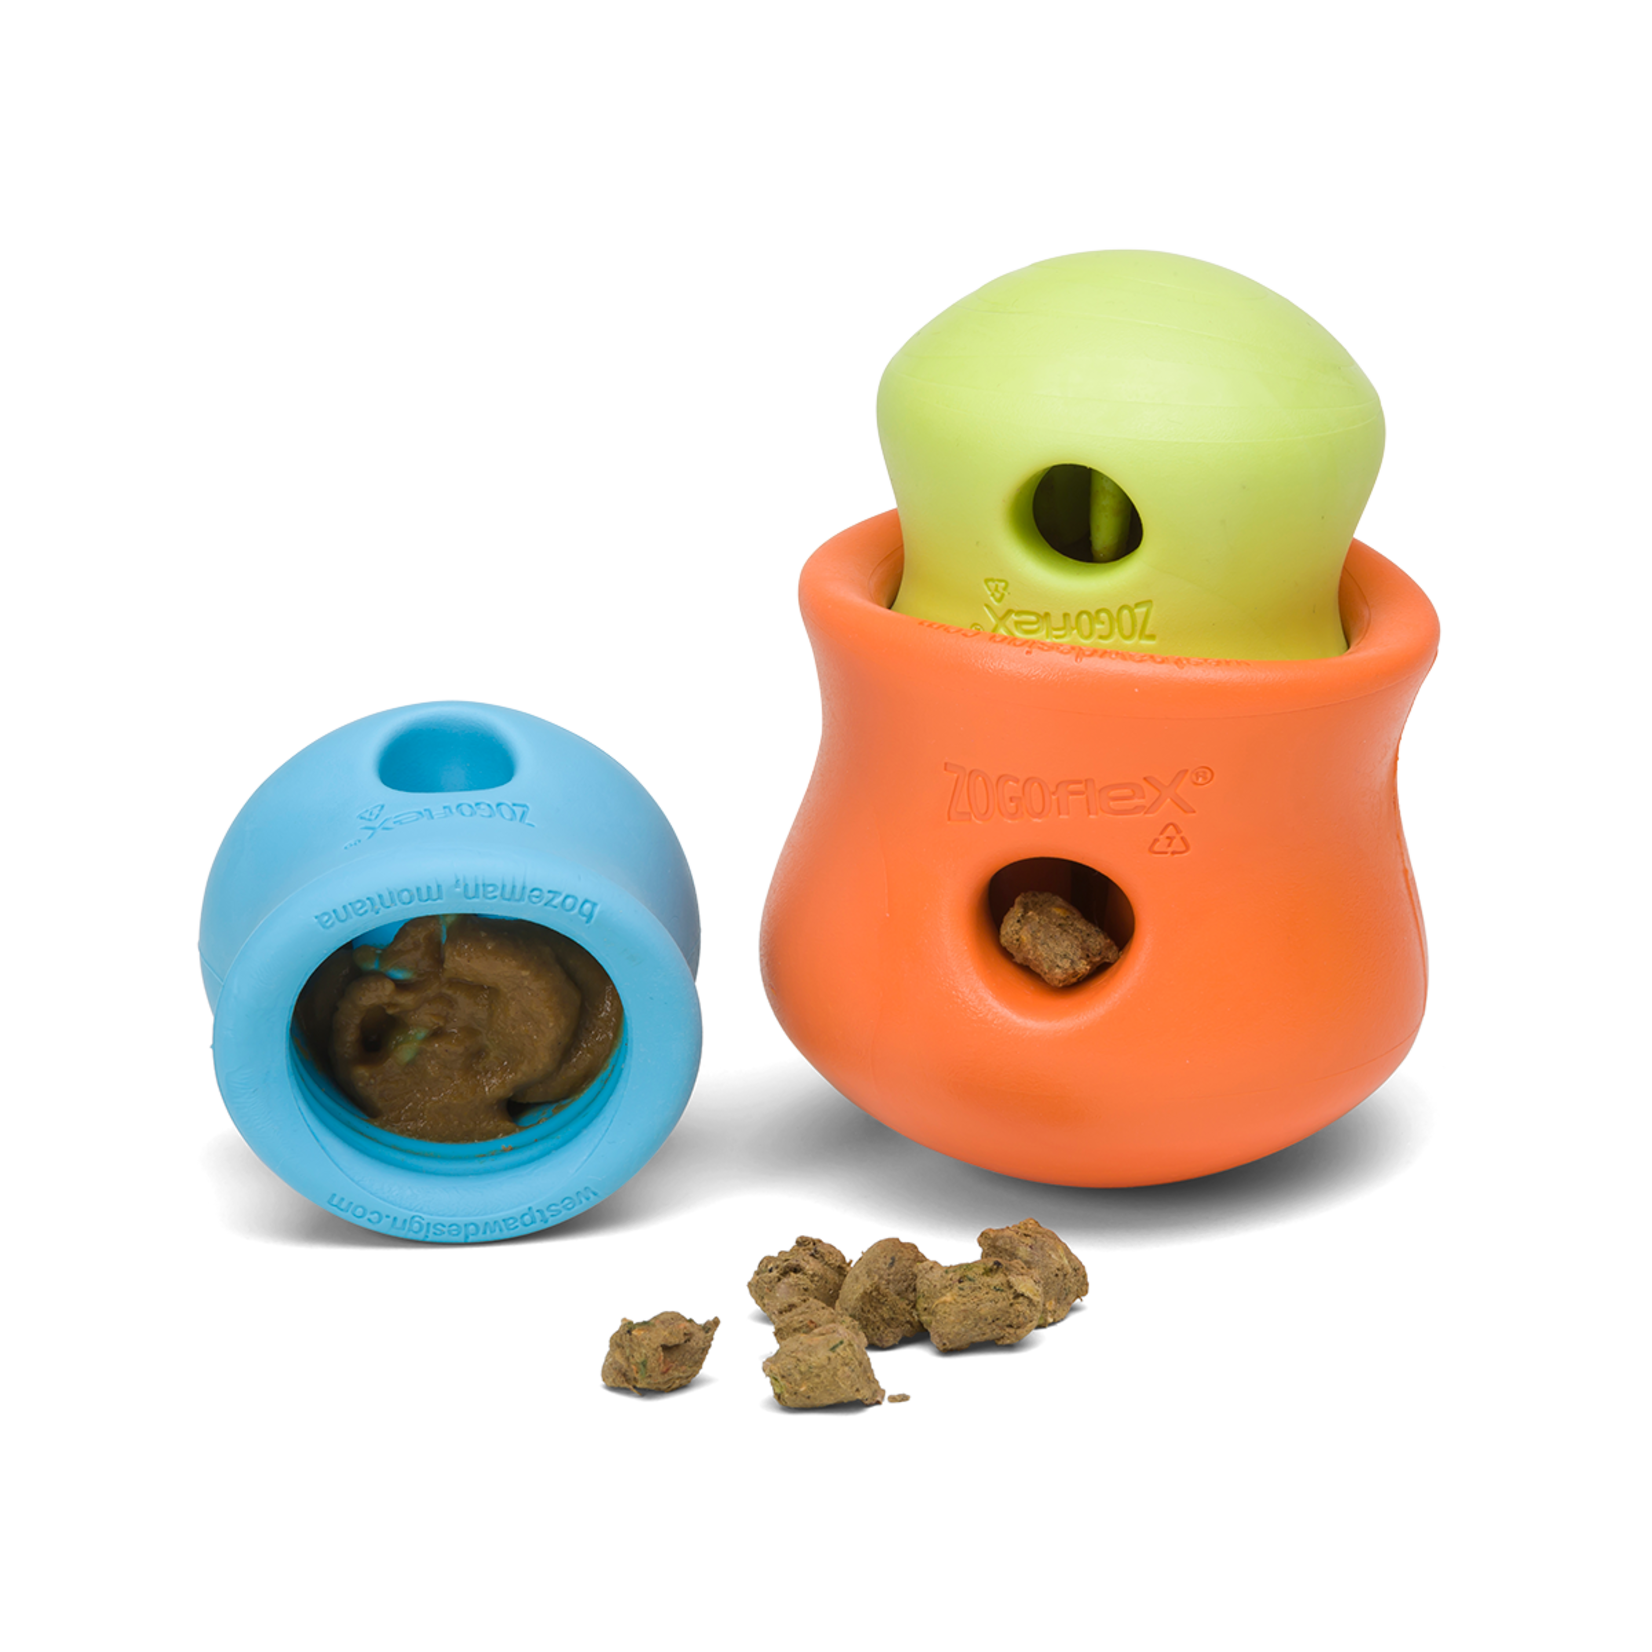 Toppl Small 3" - orange dog toy/treat dispenser